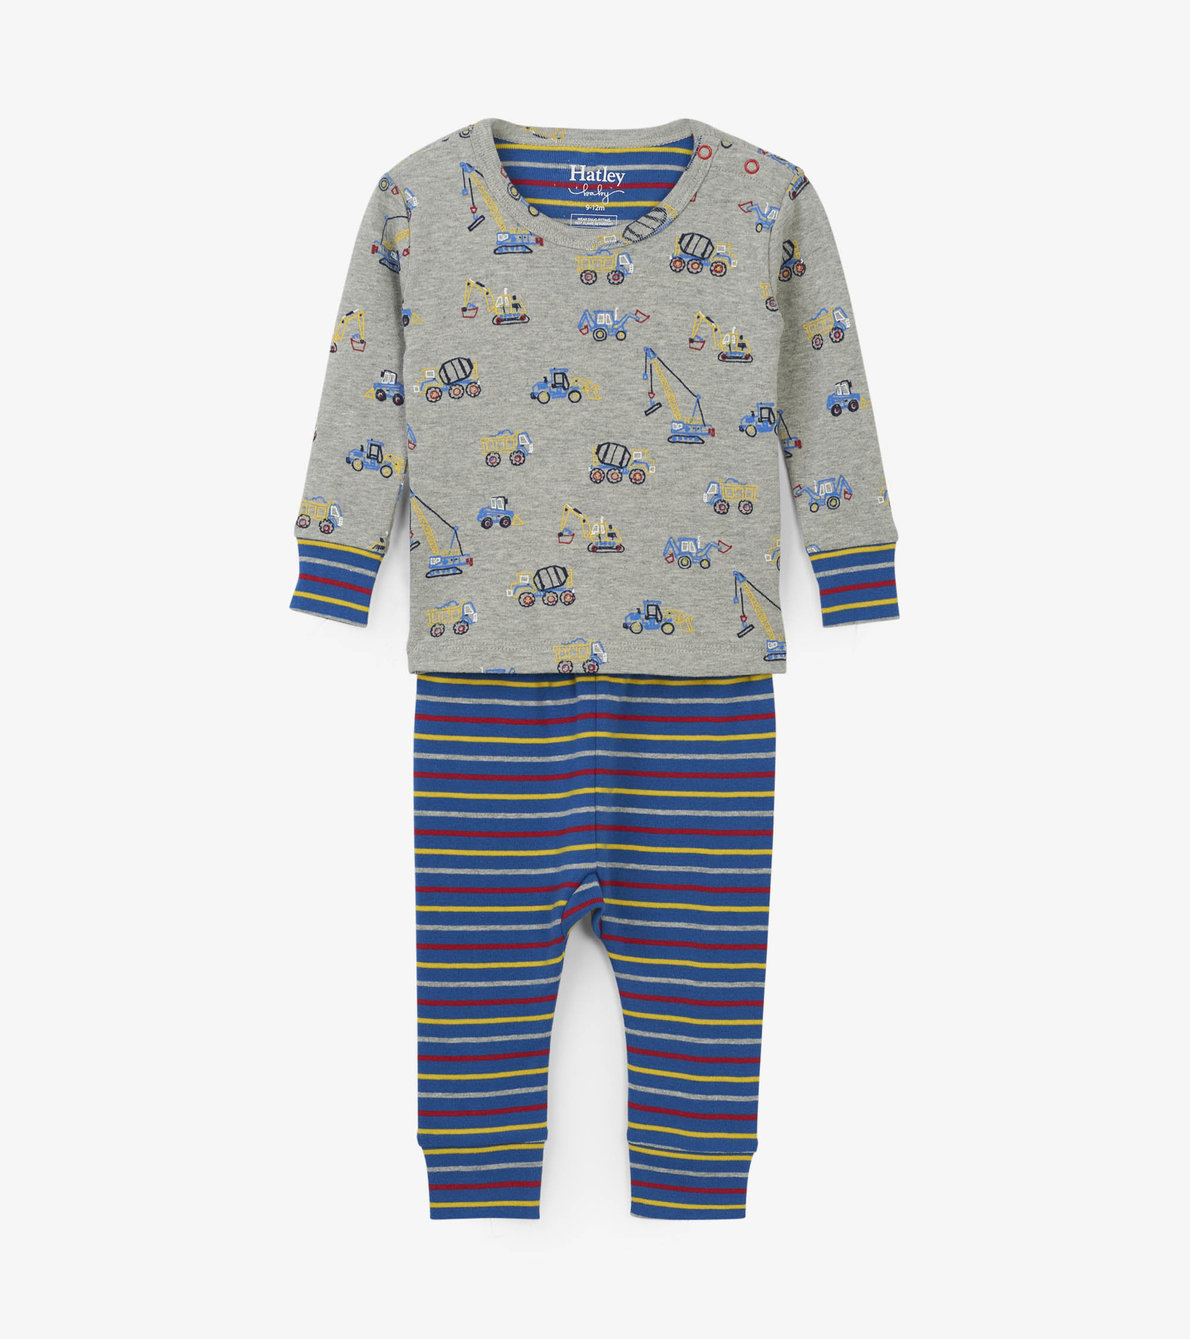 View larger image of Crayon Construction Organic Cotton Baby Pajama Set